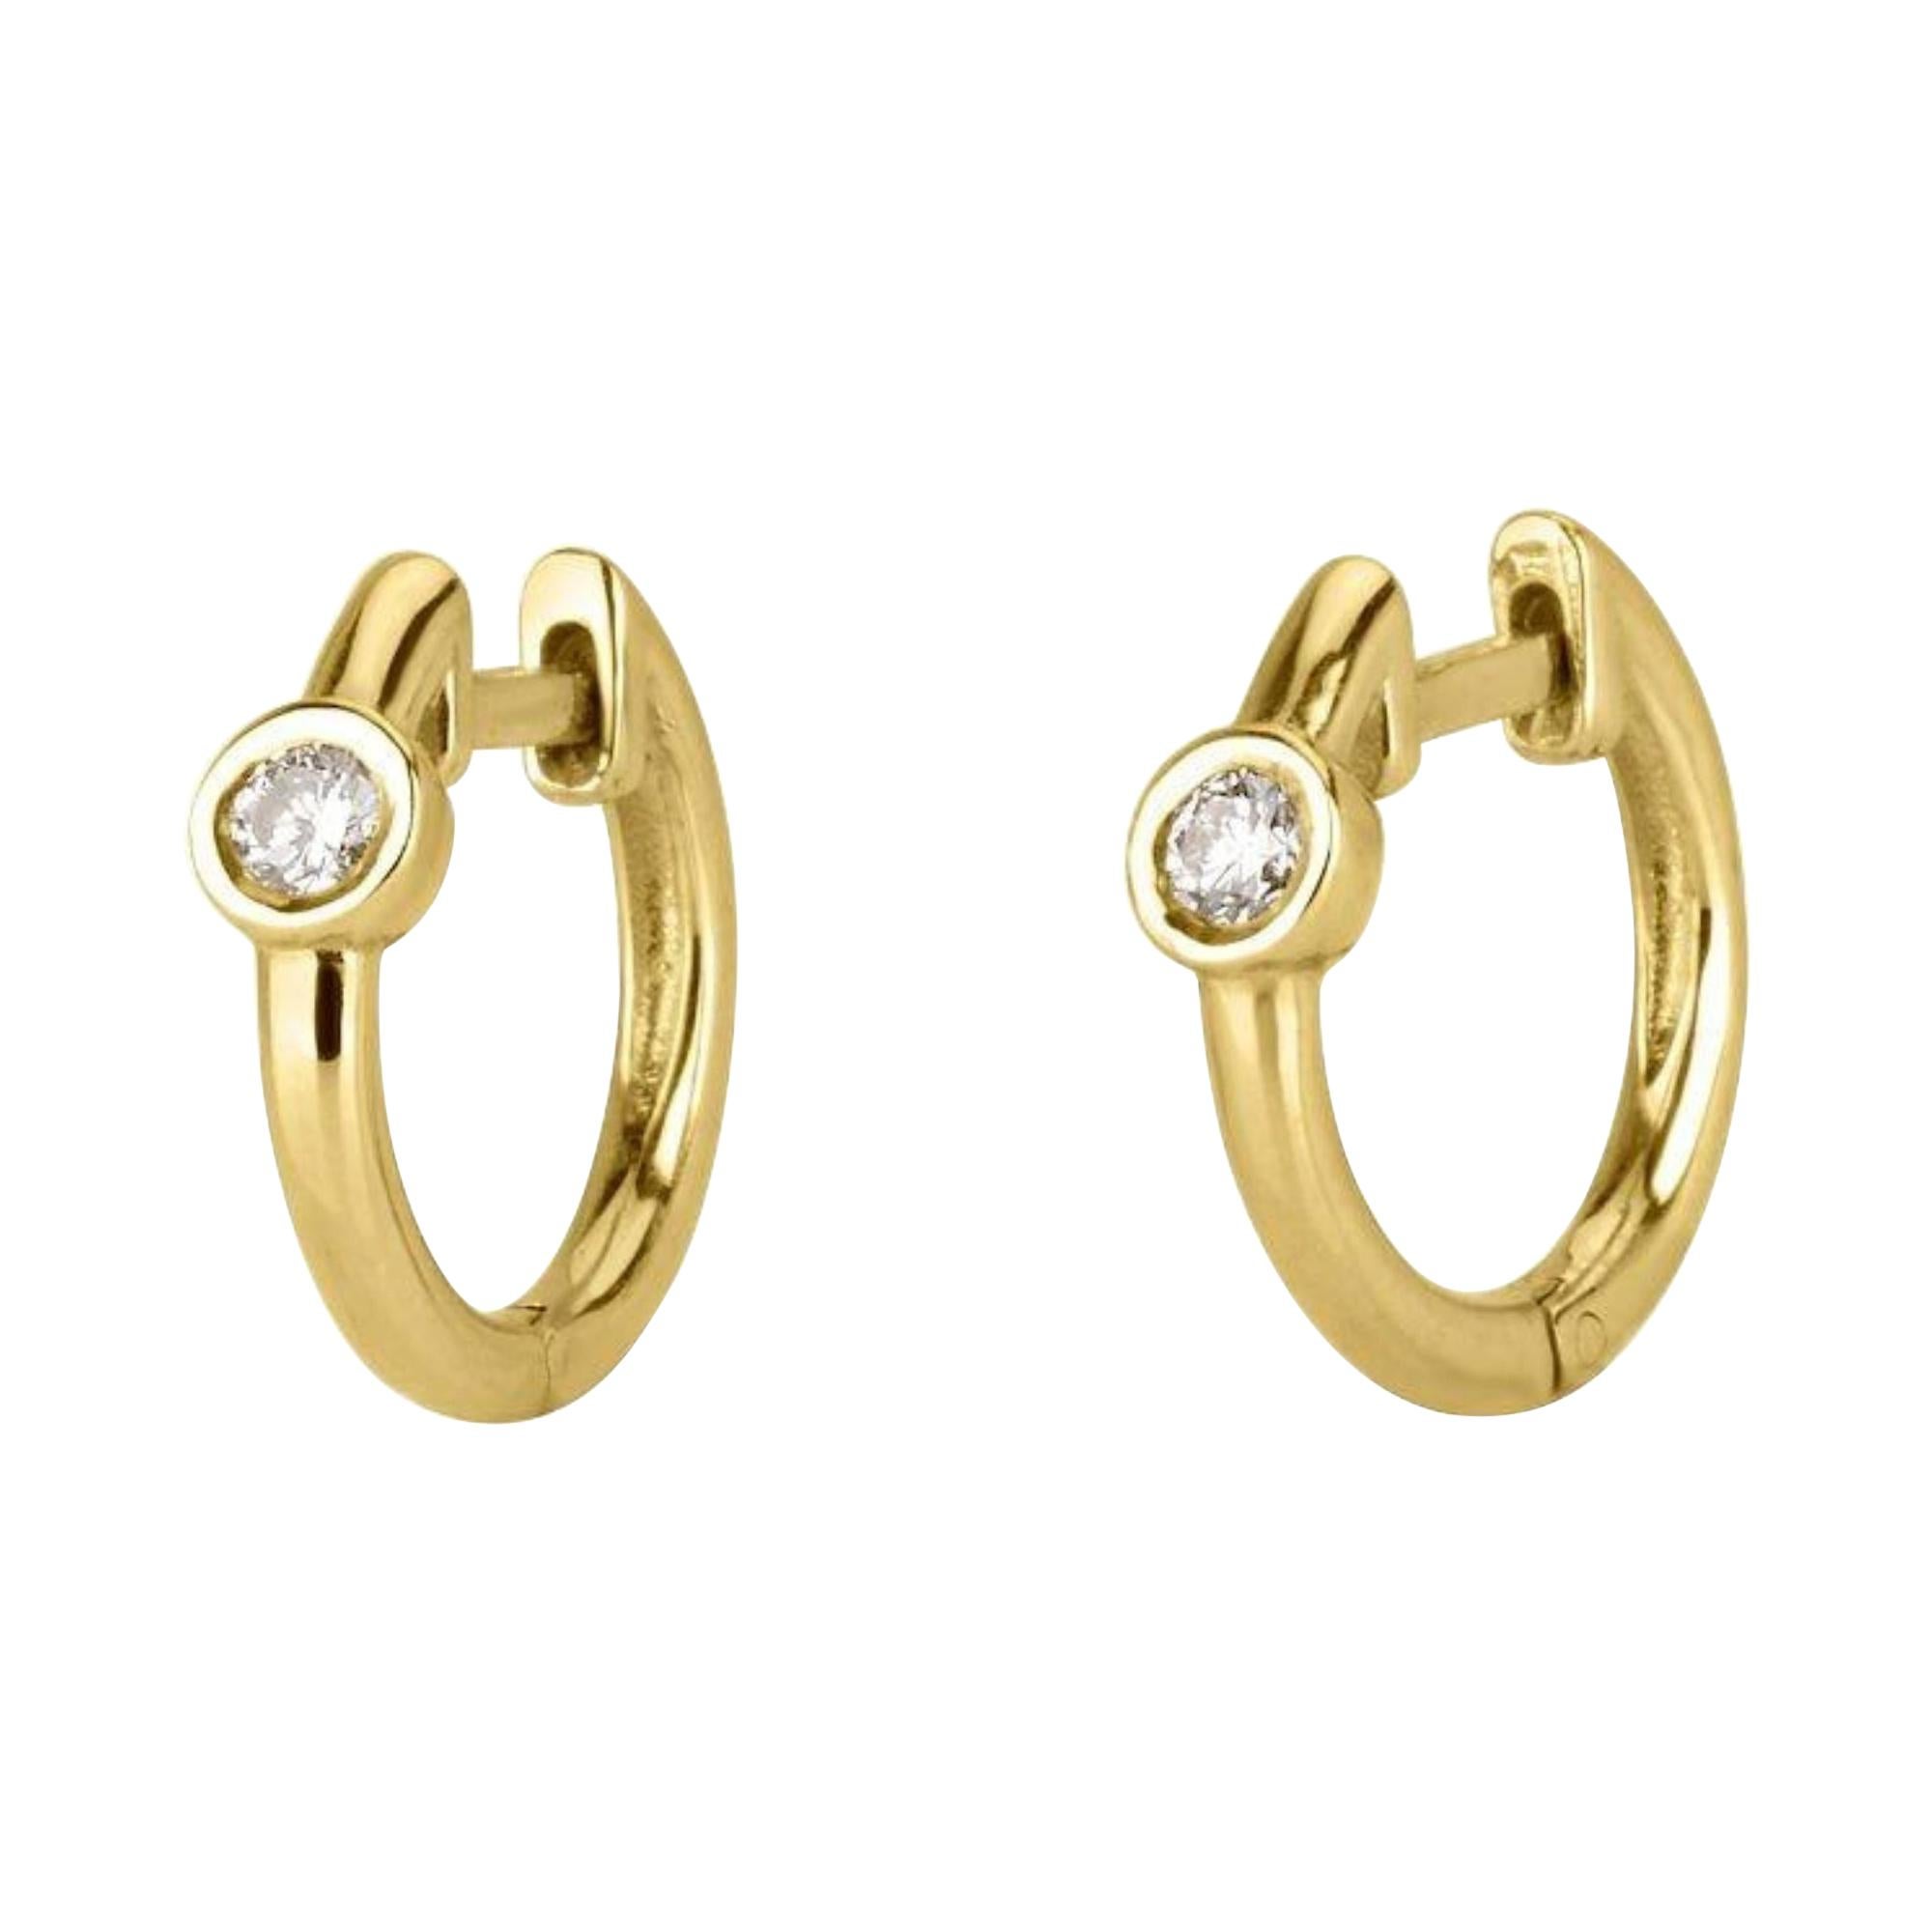 0.10 Carat Diamond Huggie Hoop Earrings in 14k Yellow Gold - Shlomit Rogel